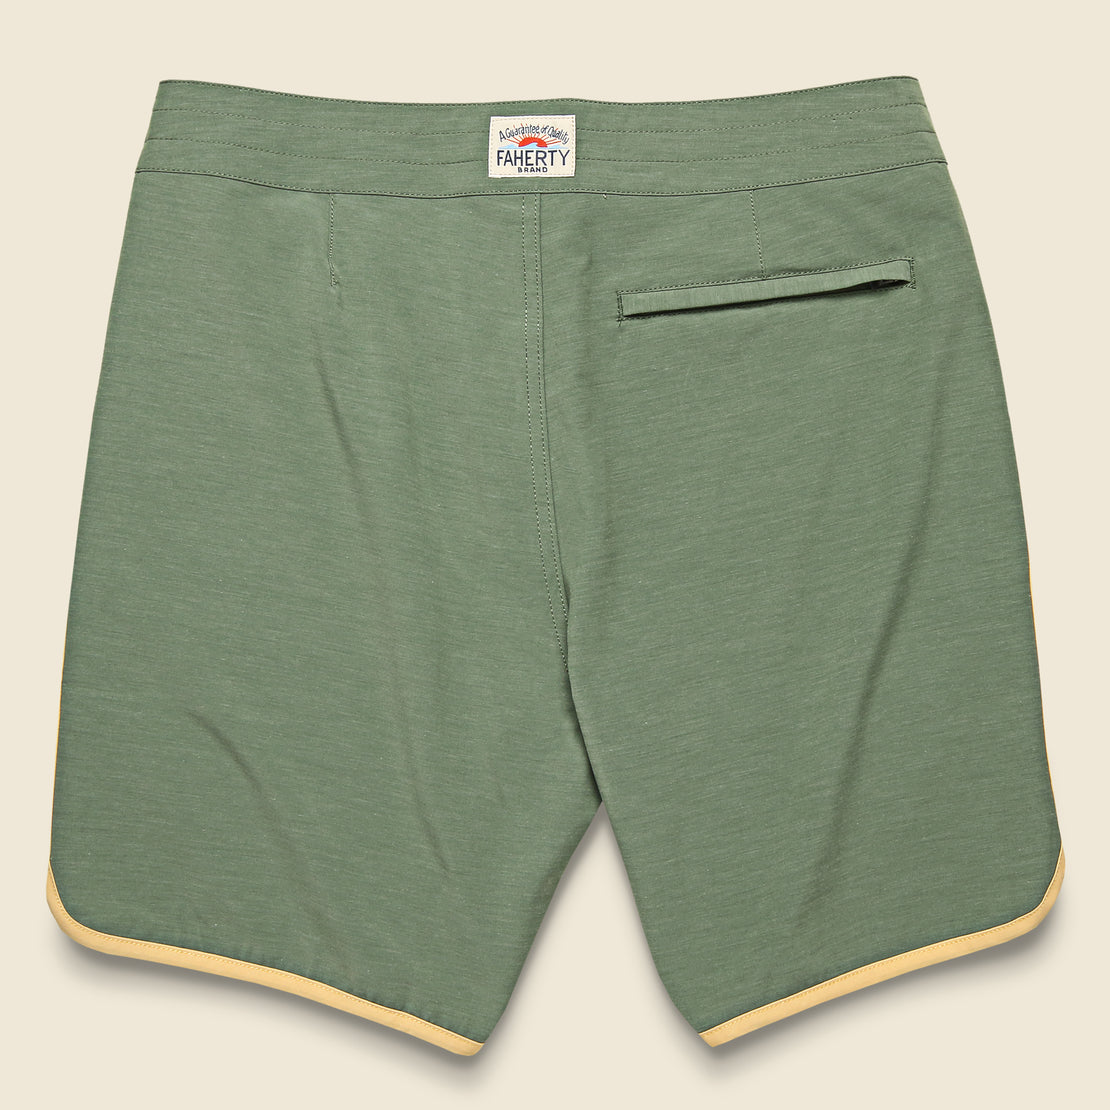 Sunset 7" Boardshort - Vintage Olive - Faherty - STAG Provisions - Shorts - Swim